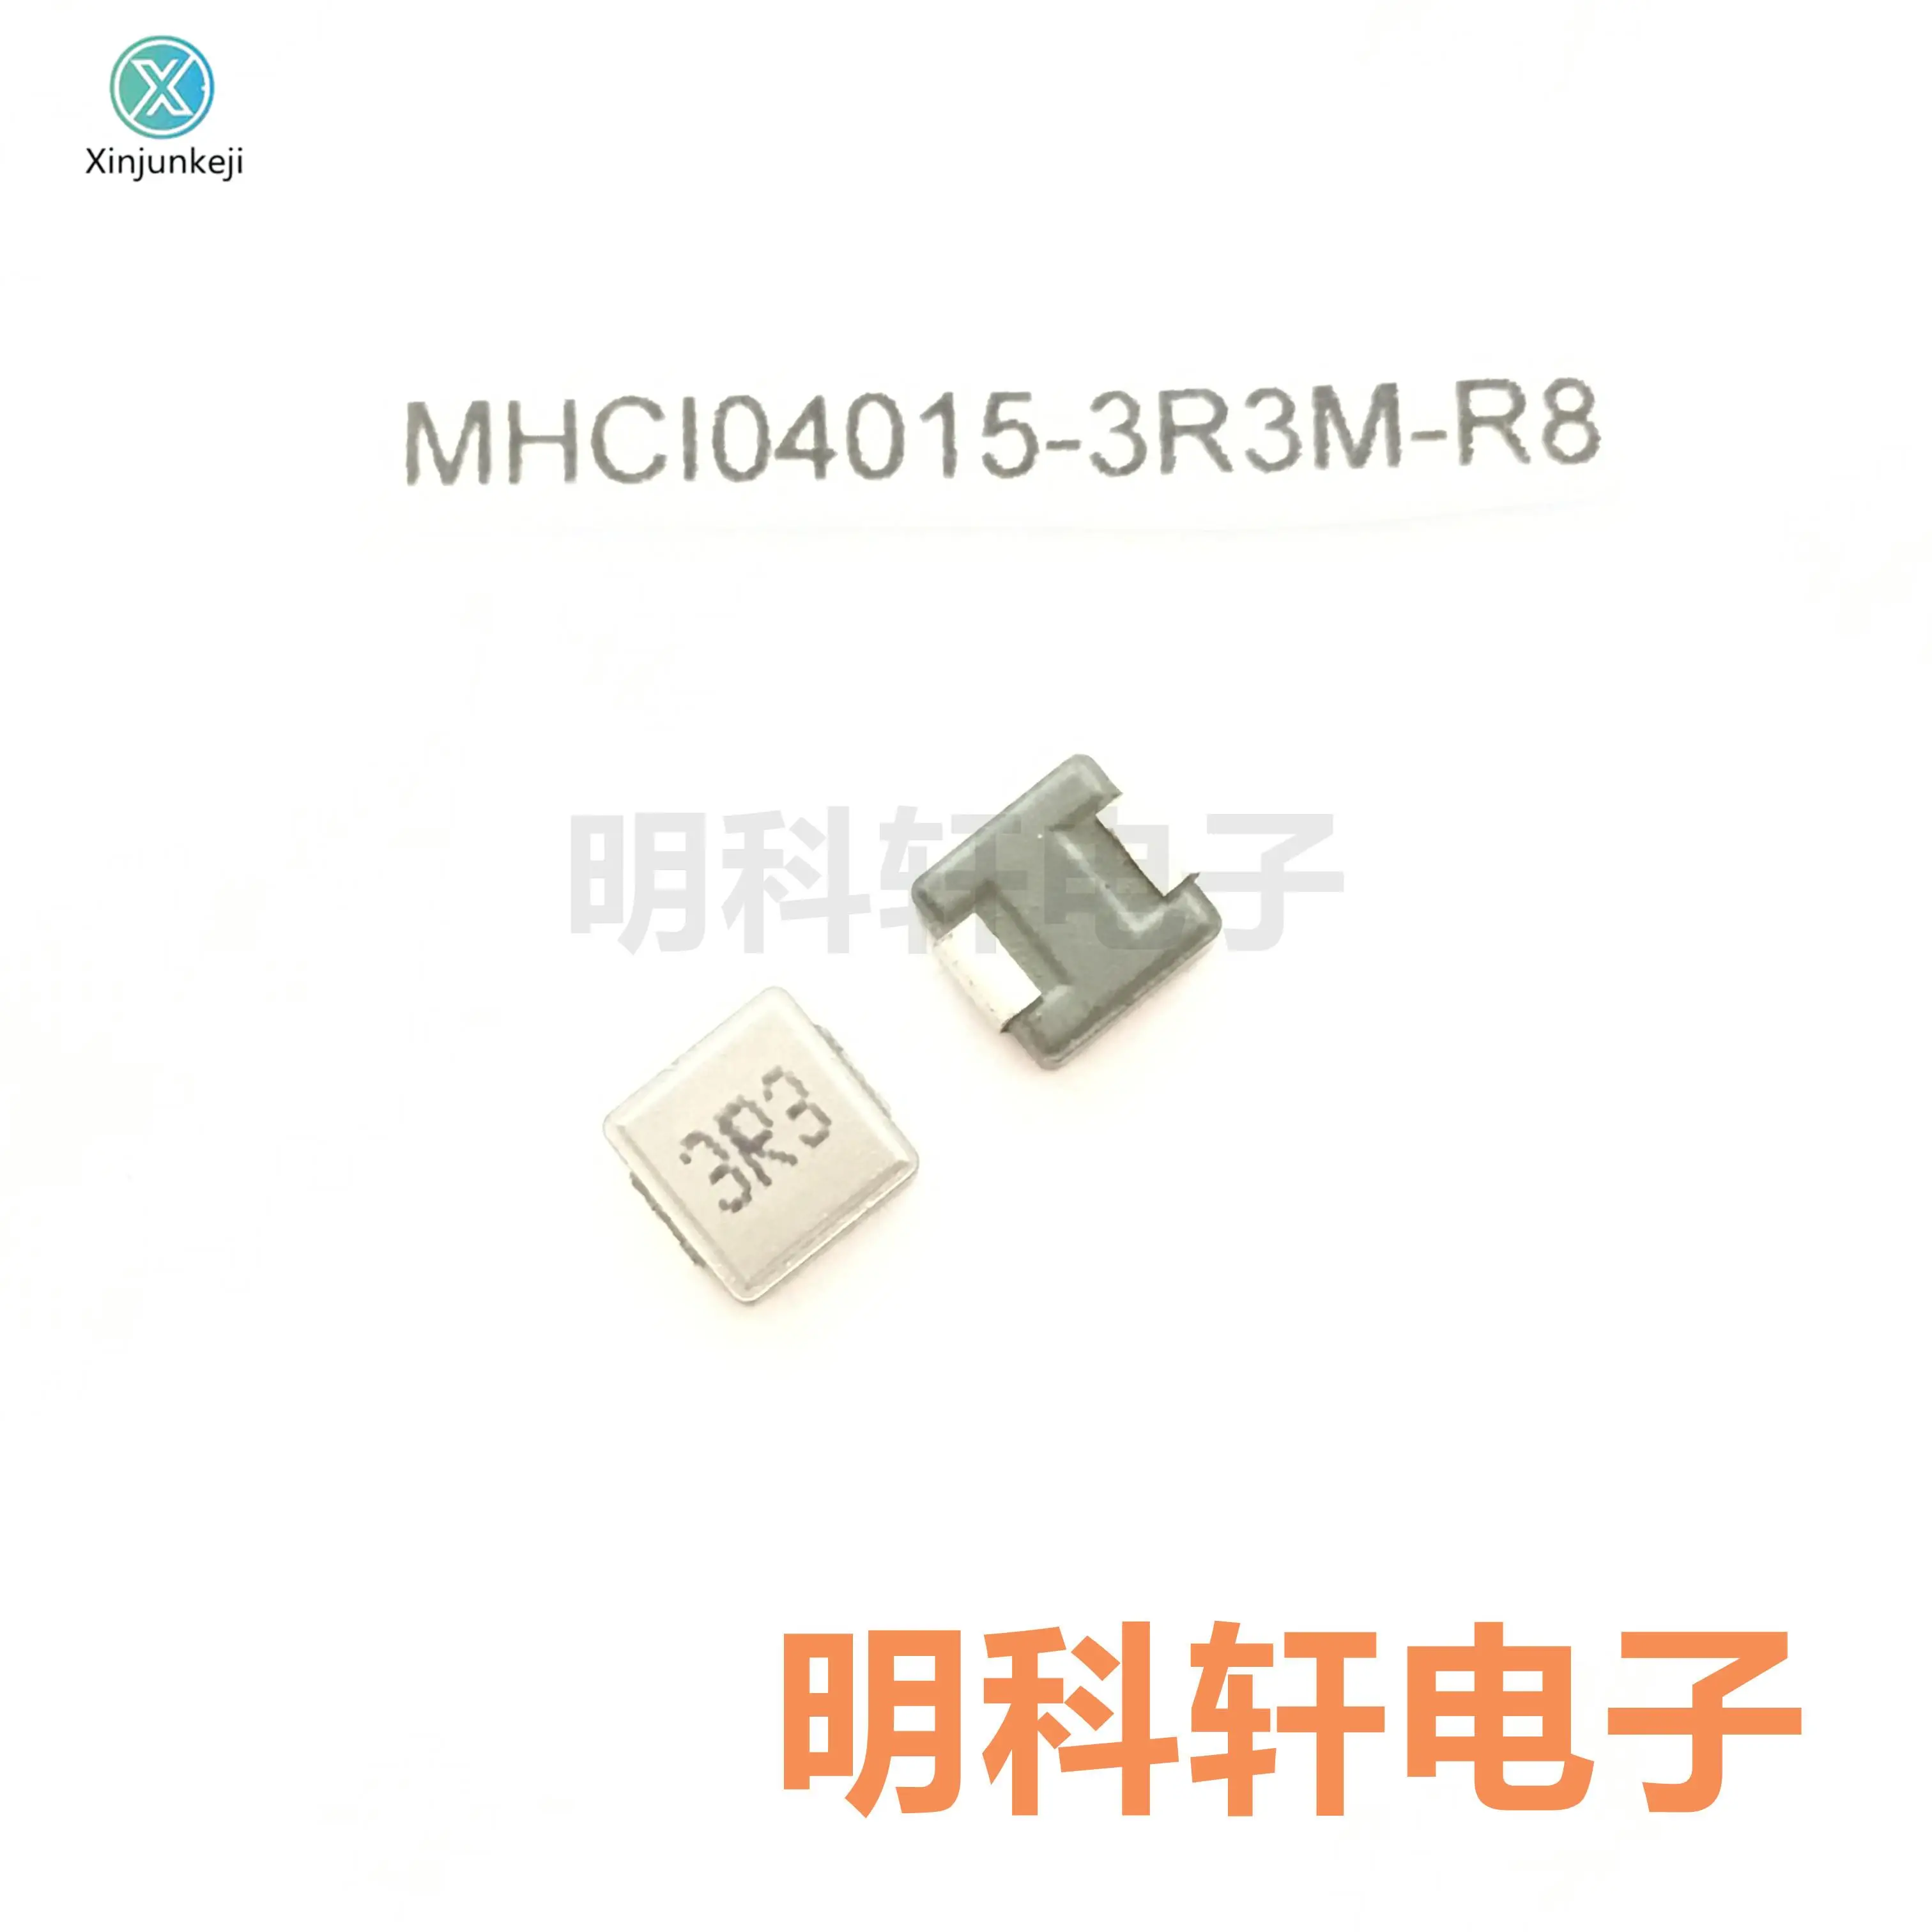 

10pcs orginal new MHCI04015-3R3M-R8 chip integrated inductance 3.3UH 4 * 4 * 1.5